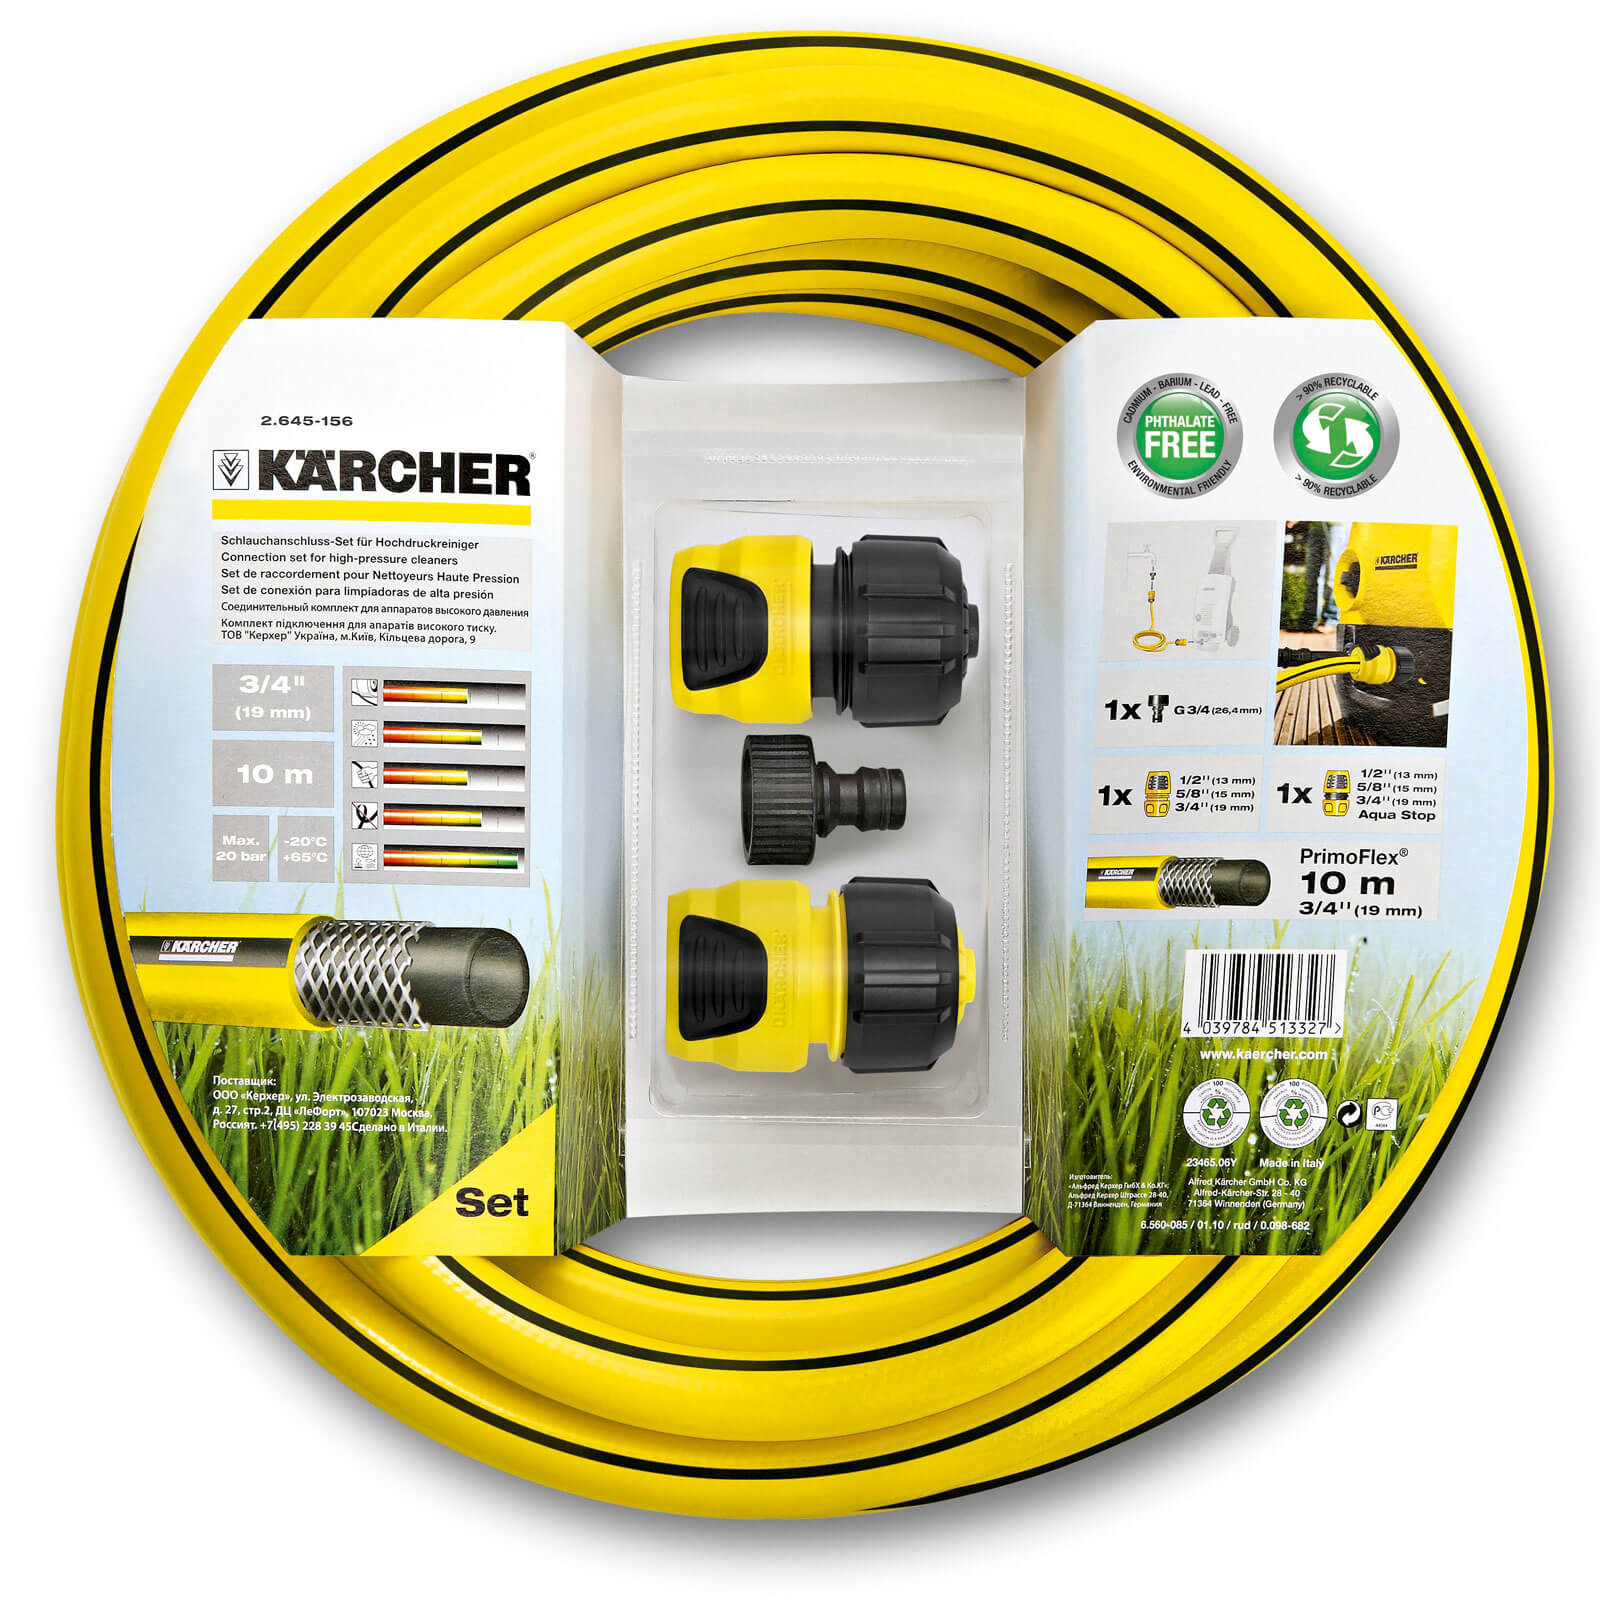 Karcher Pressure Washer Hose Connection Kit 3/4" / 19mm 10m Yellow & Black